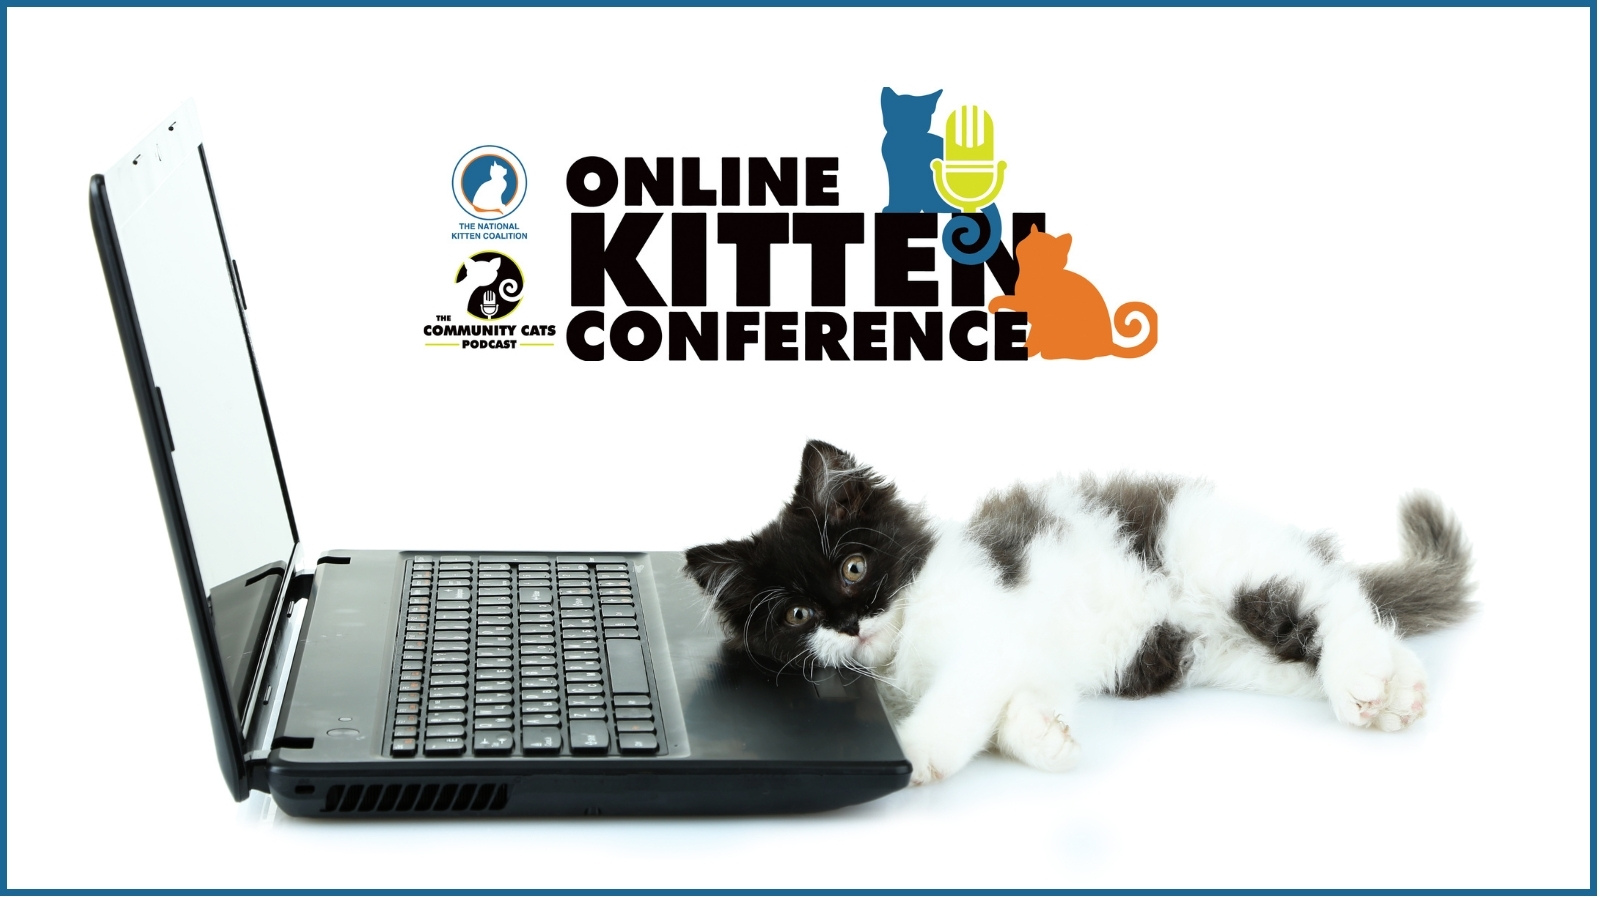 Online Kitten Conference logo and black and white kitten lying on laptop keyboard